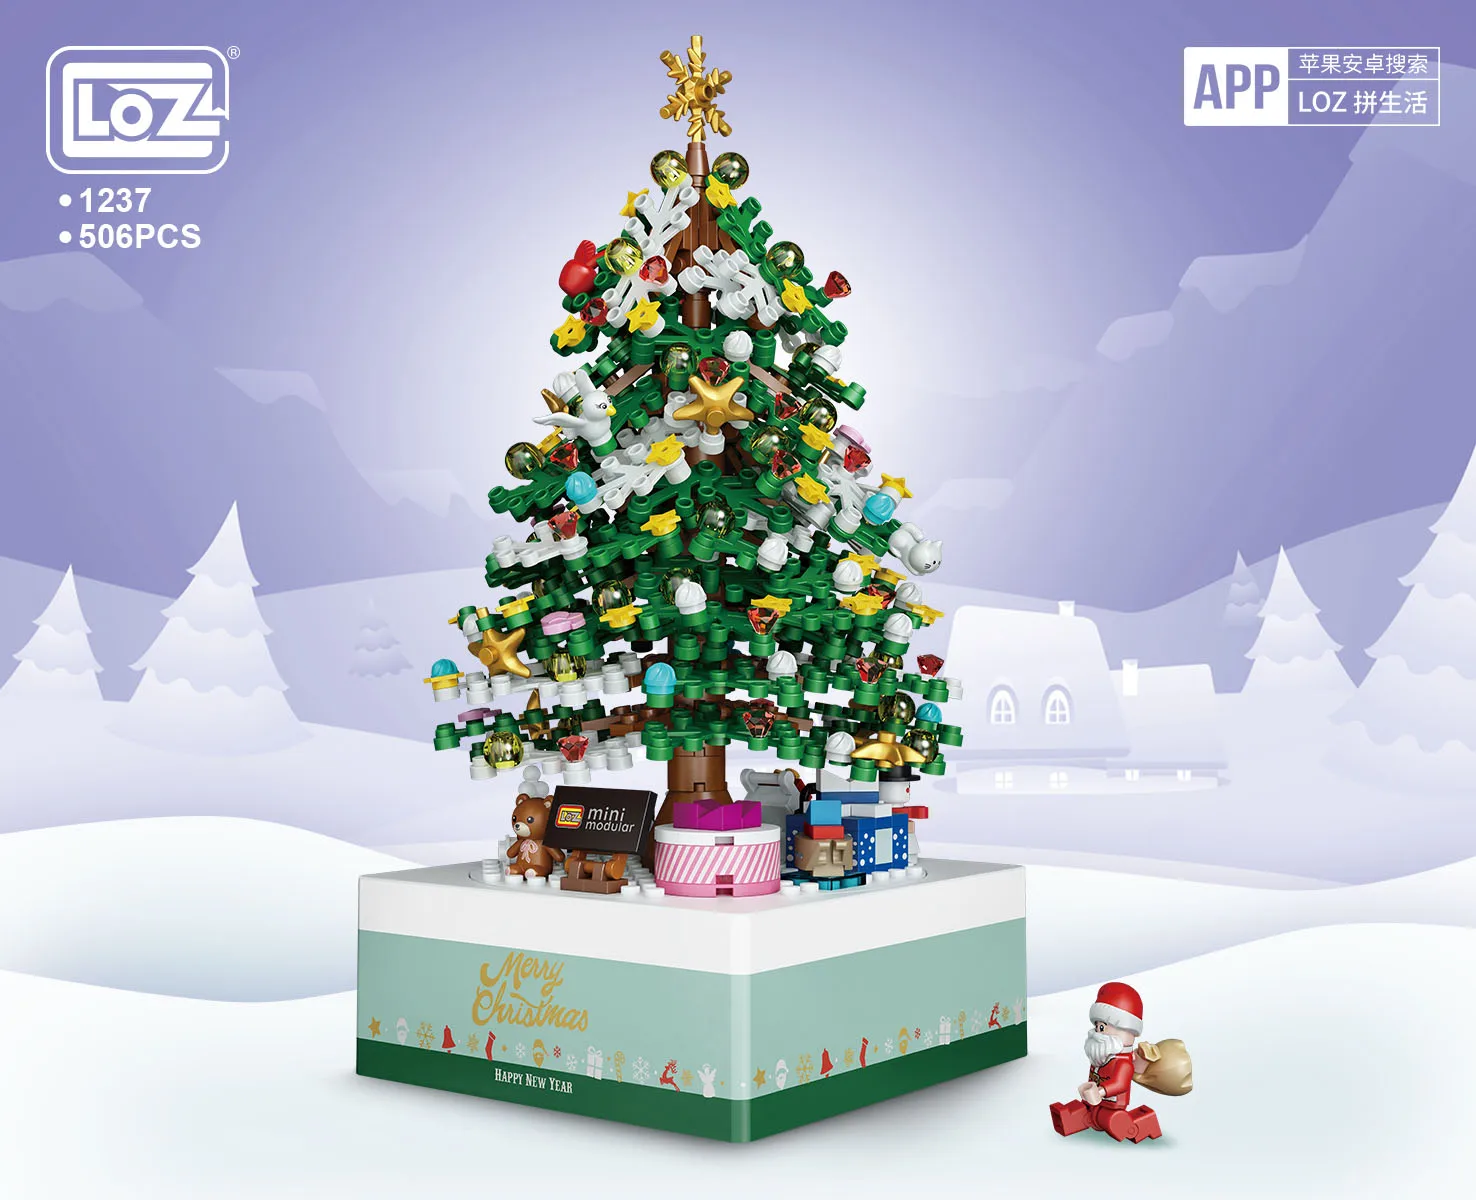 Loz 1237 Mini Particle Christmas Tree Music Box Assembled Building Blocks Bricks Model Children's Educational Toy Christmas Gift images - 2